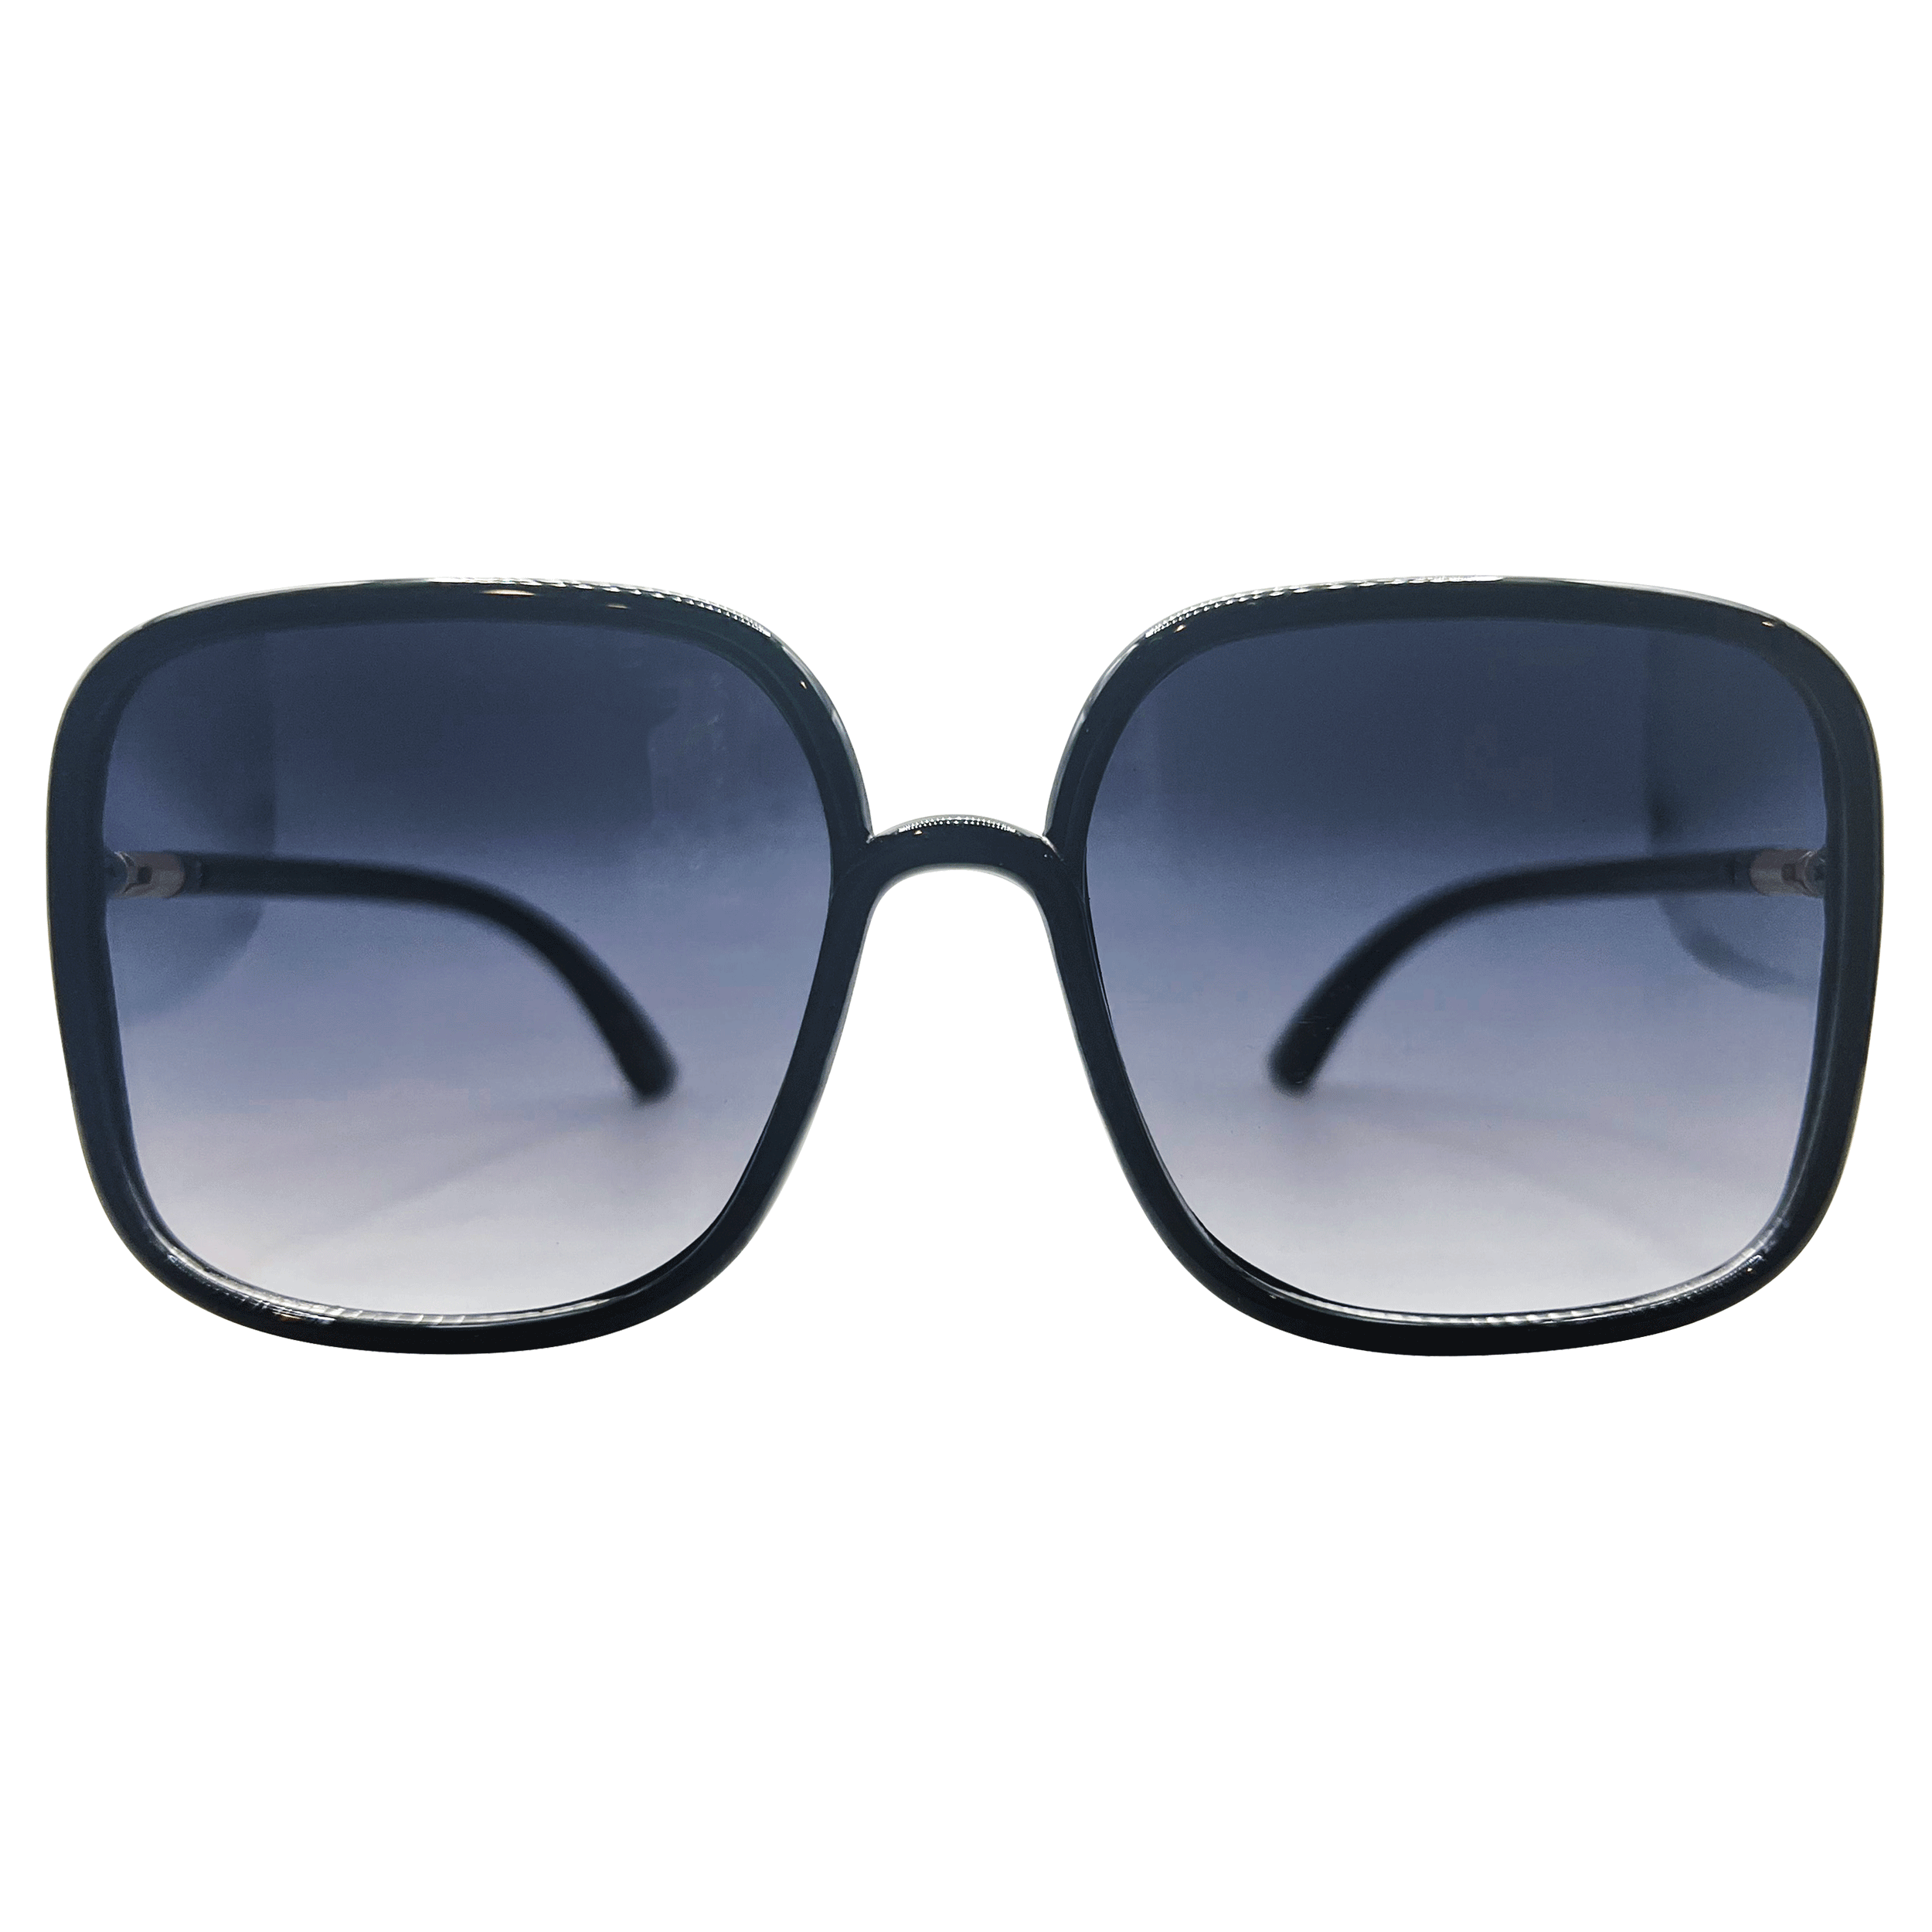 TOP NOTCH 70s Square Sunglasses